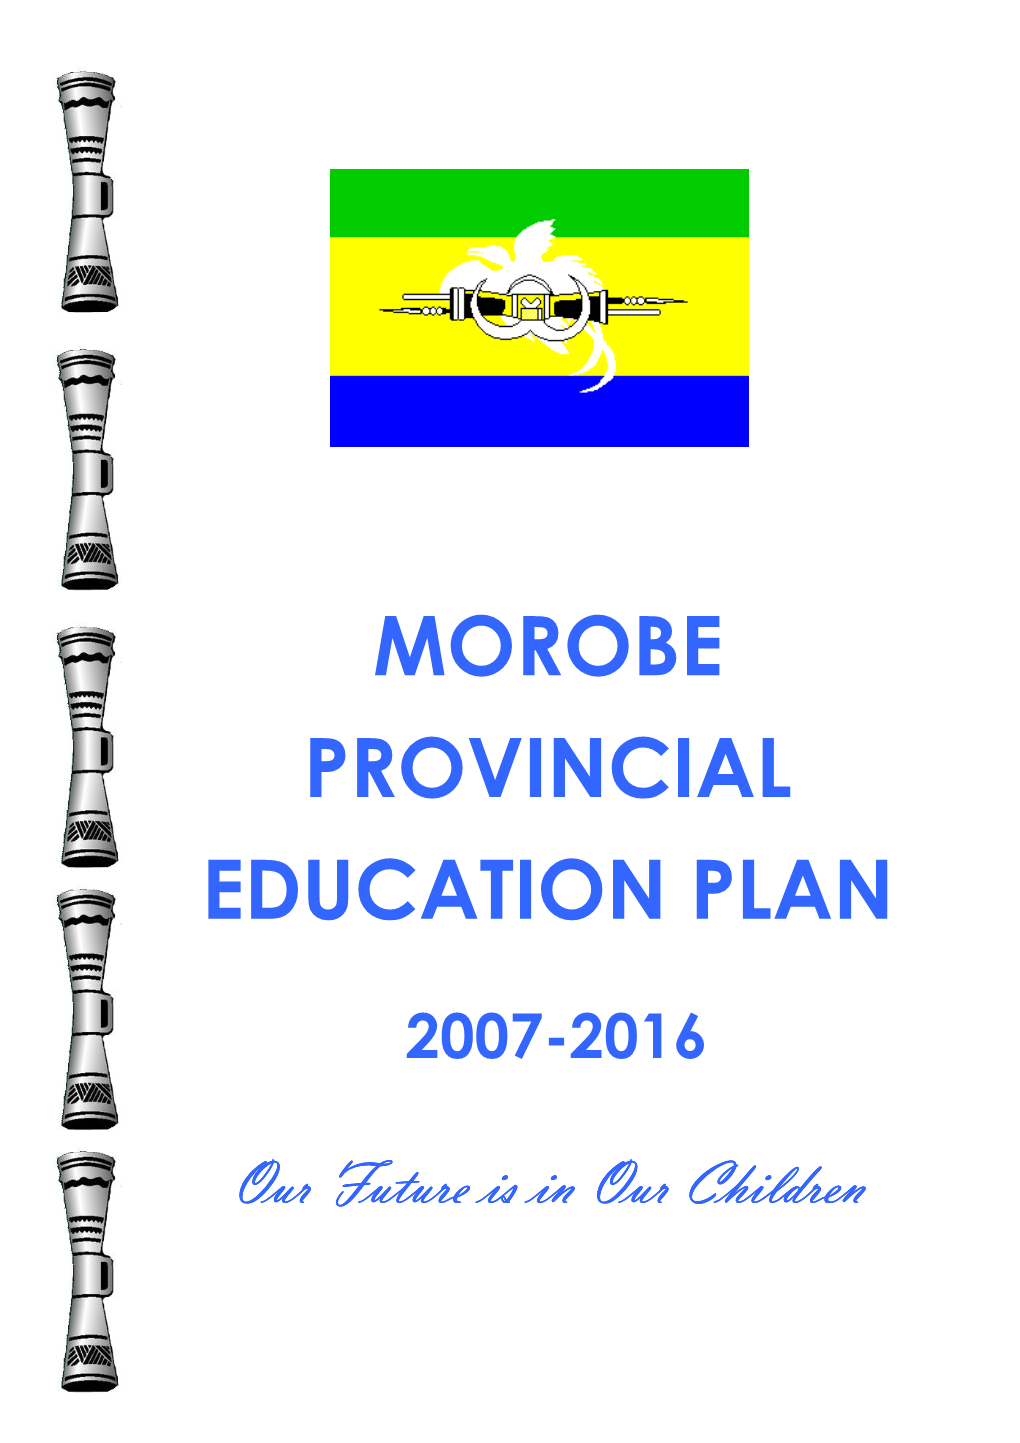 Morobe Provincial Education Plan 2007-2016